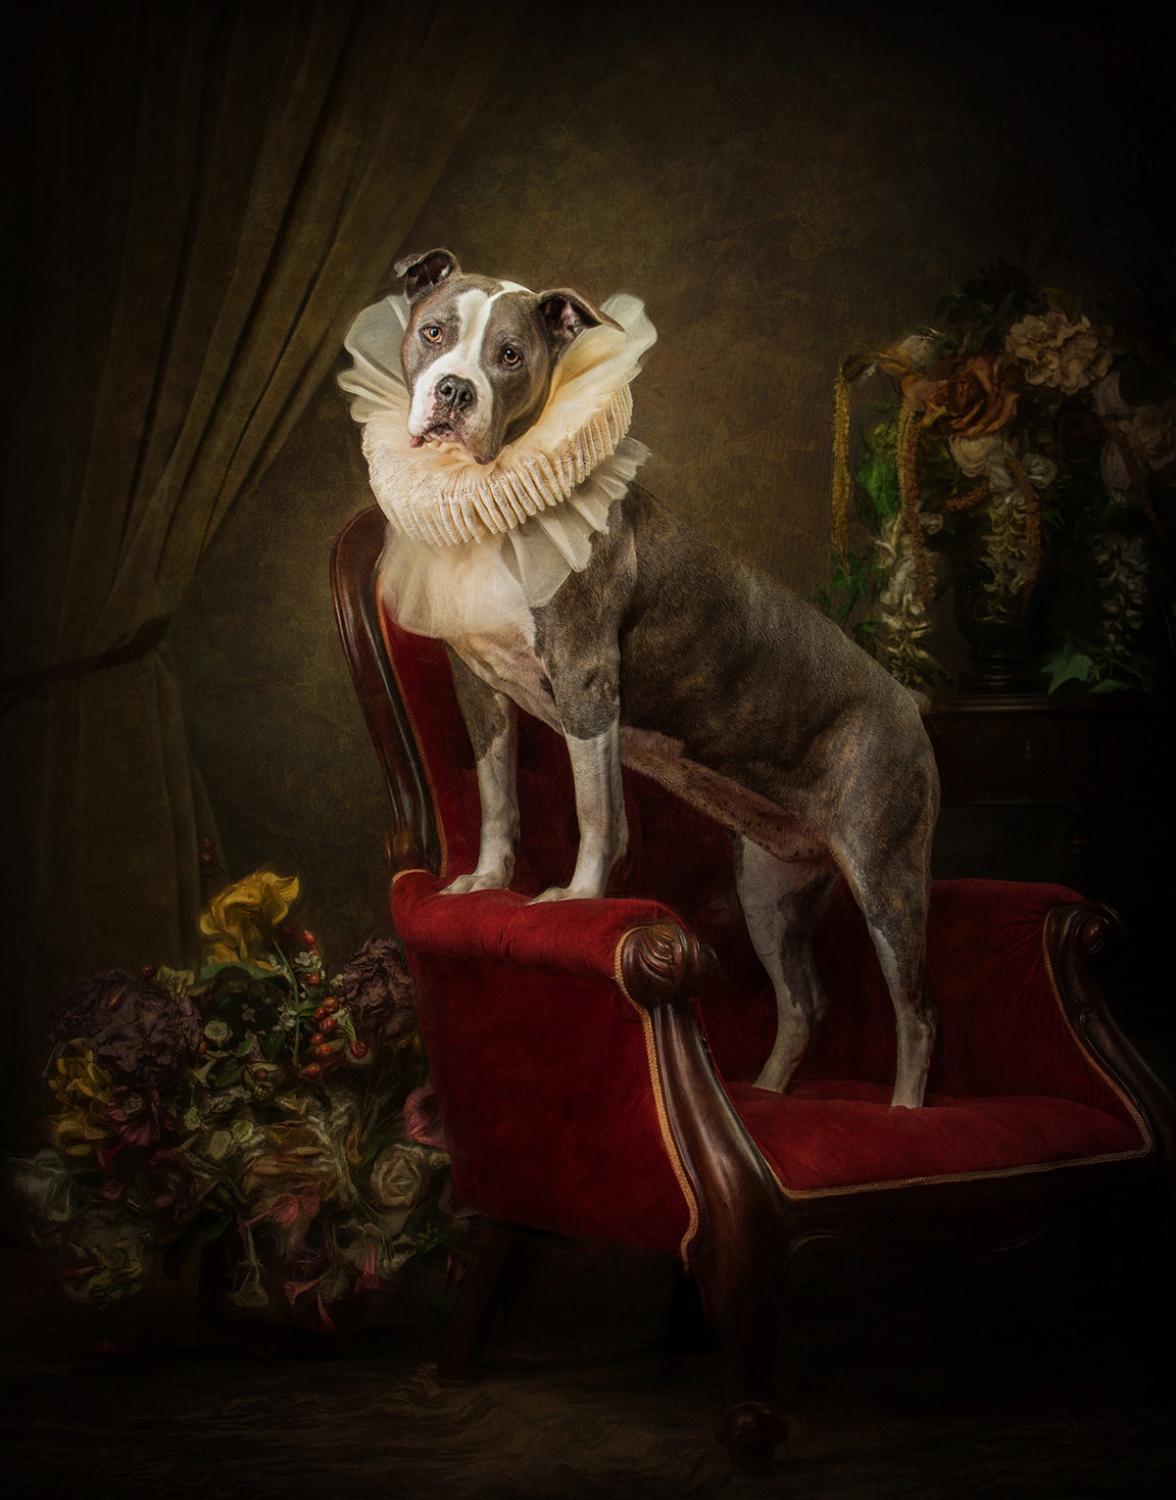 award winning animal photography by lisa asp